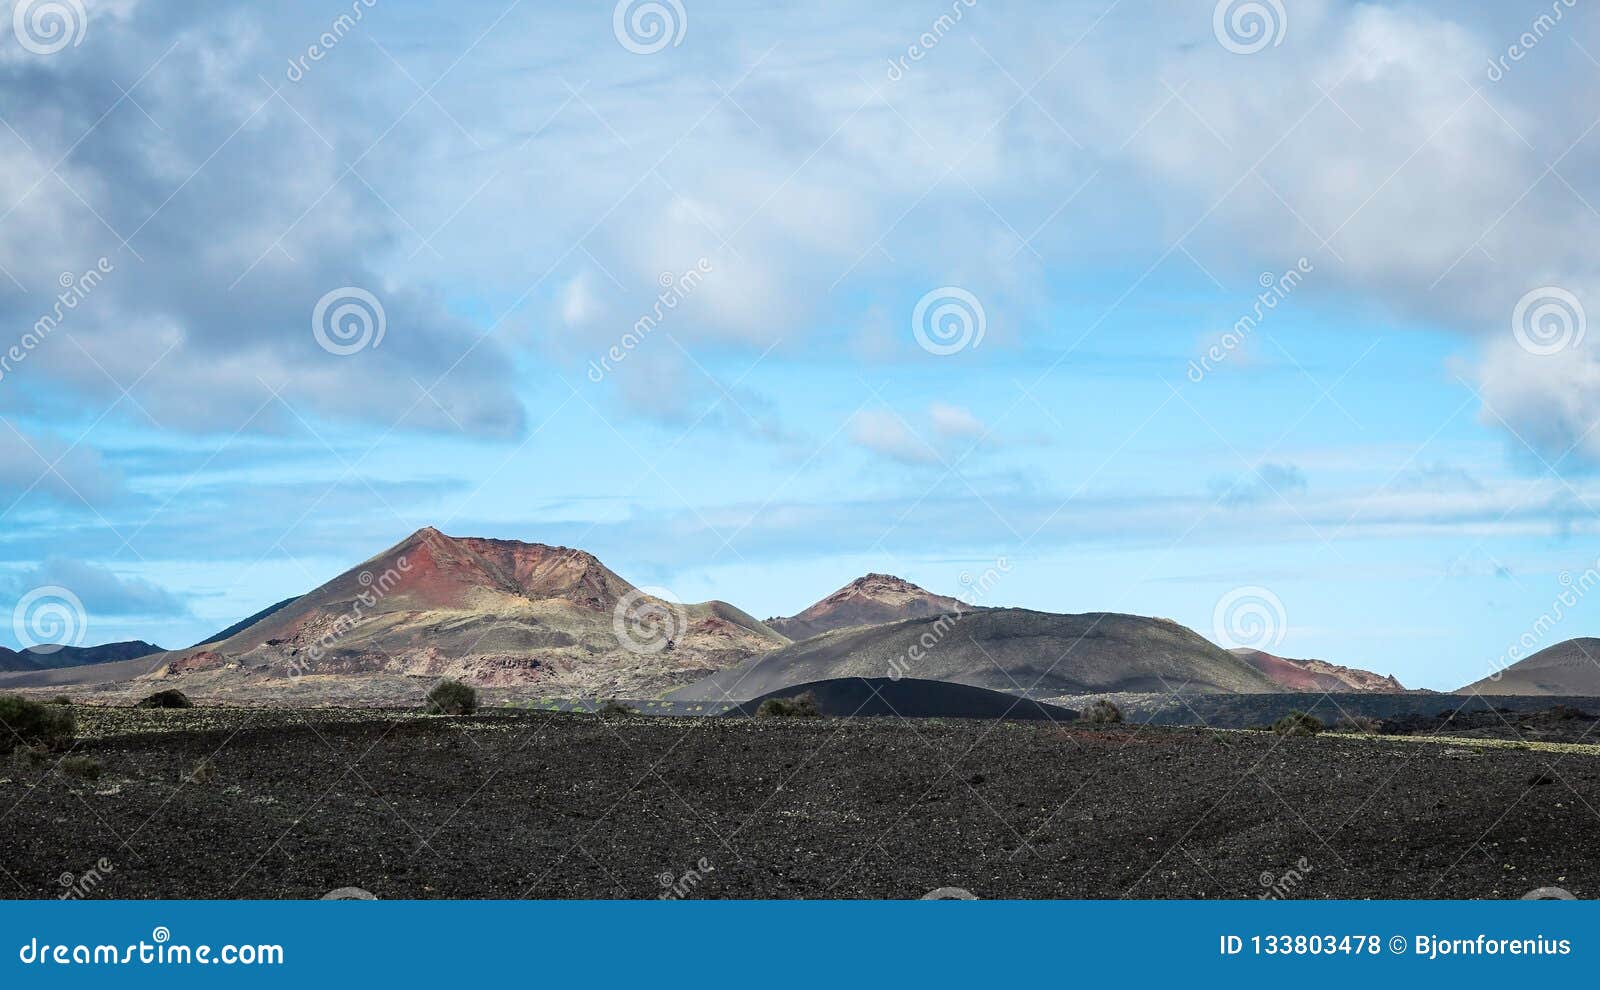 volcano caldera crater. volcanic landscape